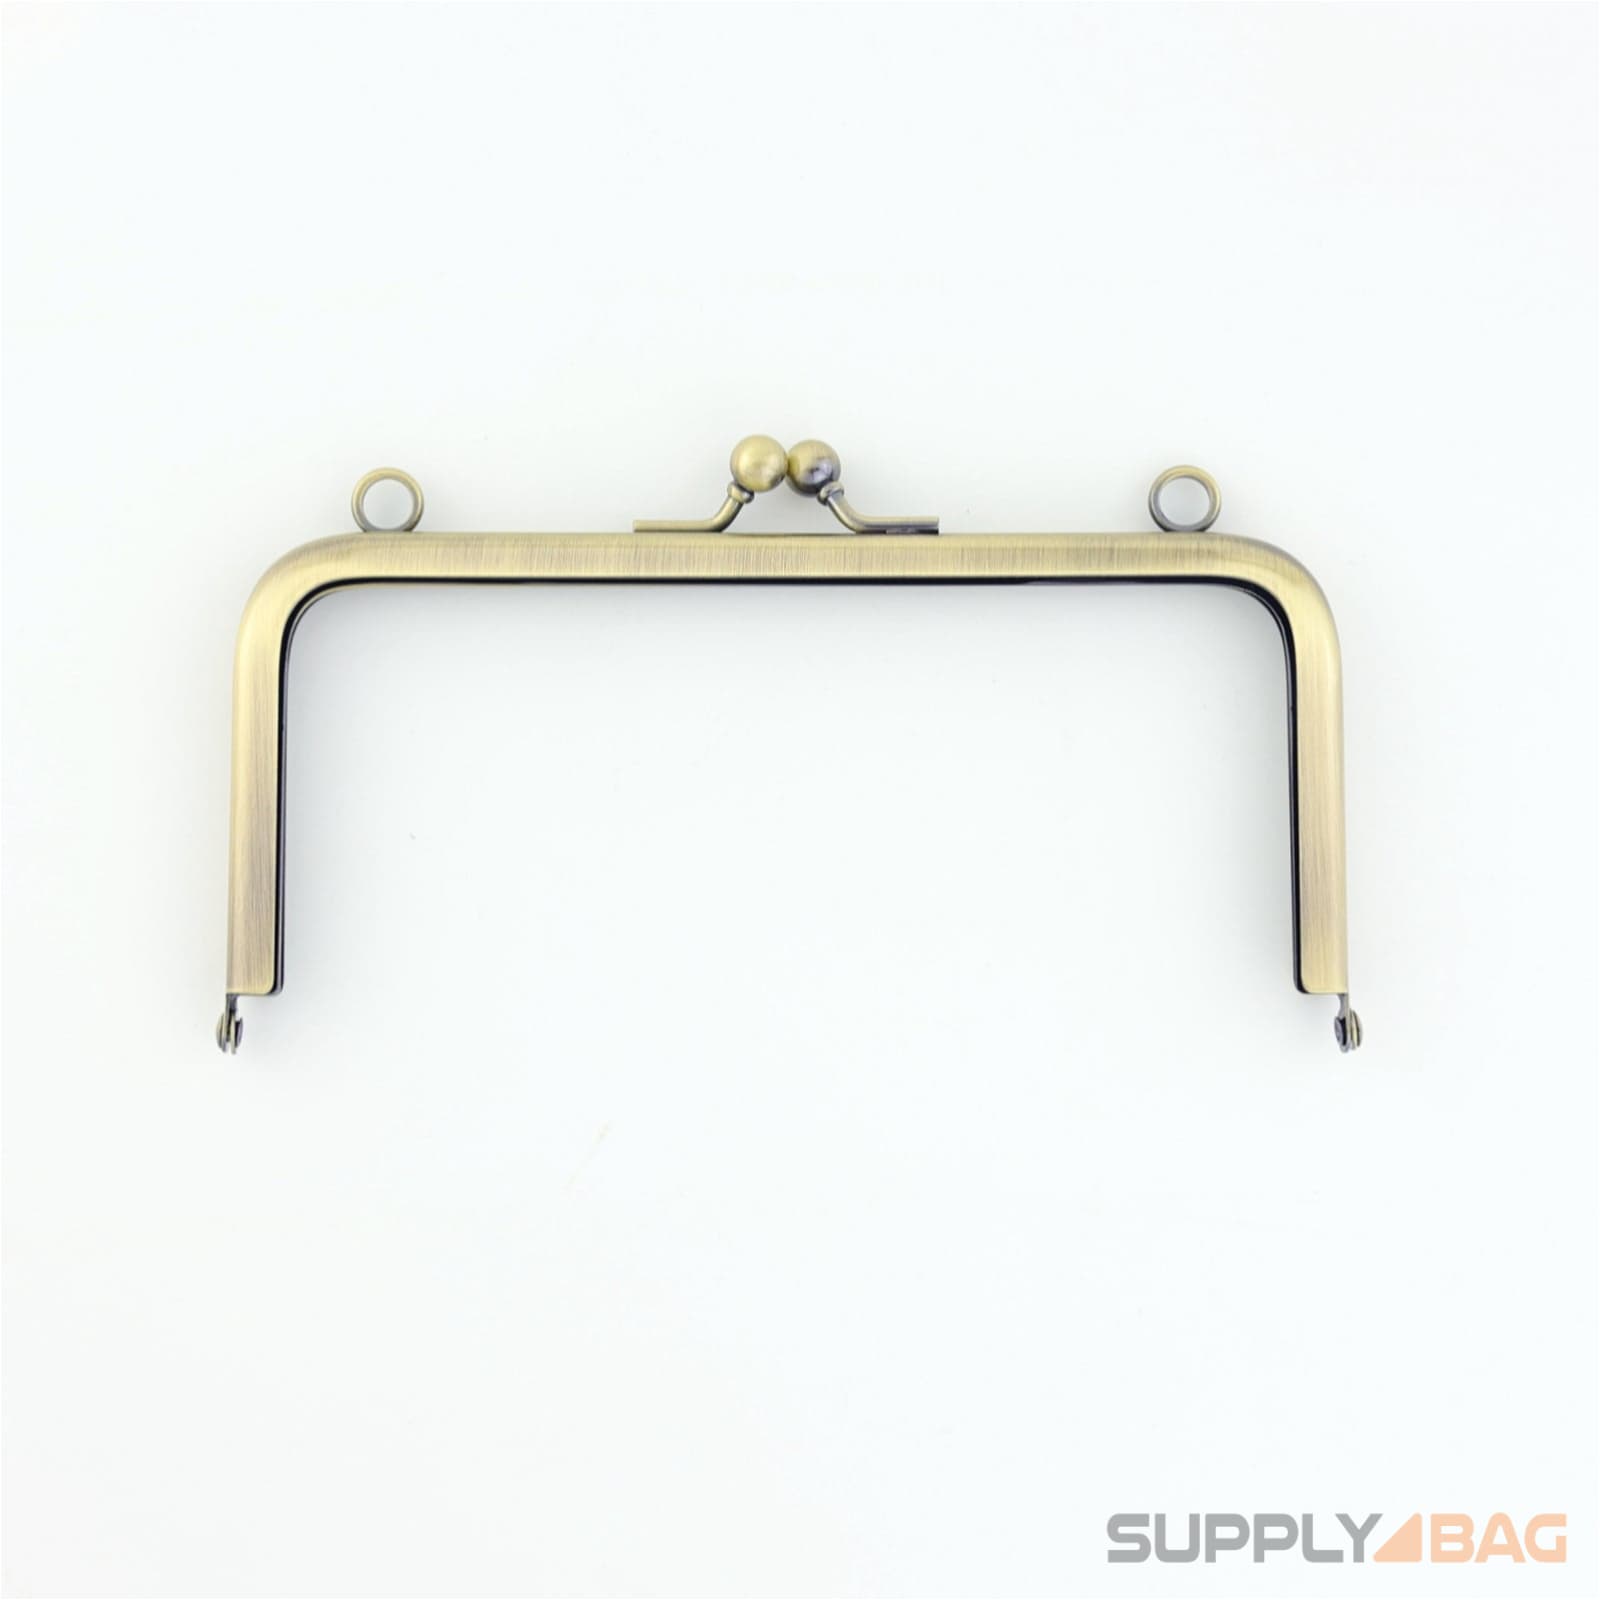 6 x 2 3/4 inch - kisslock clasp - antique brass metal purse frame